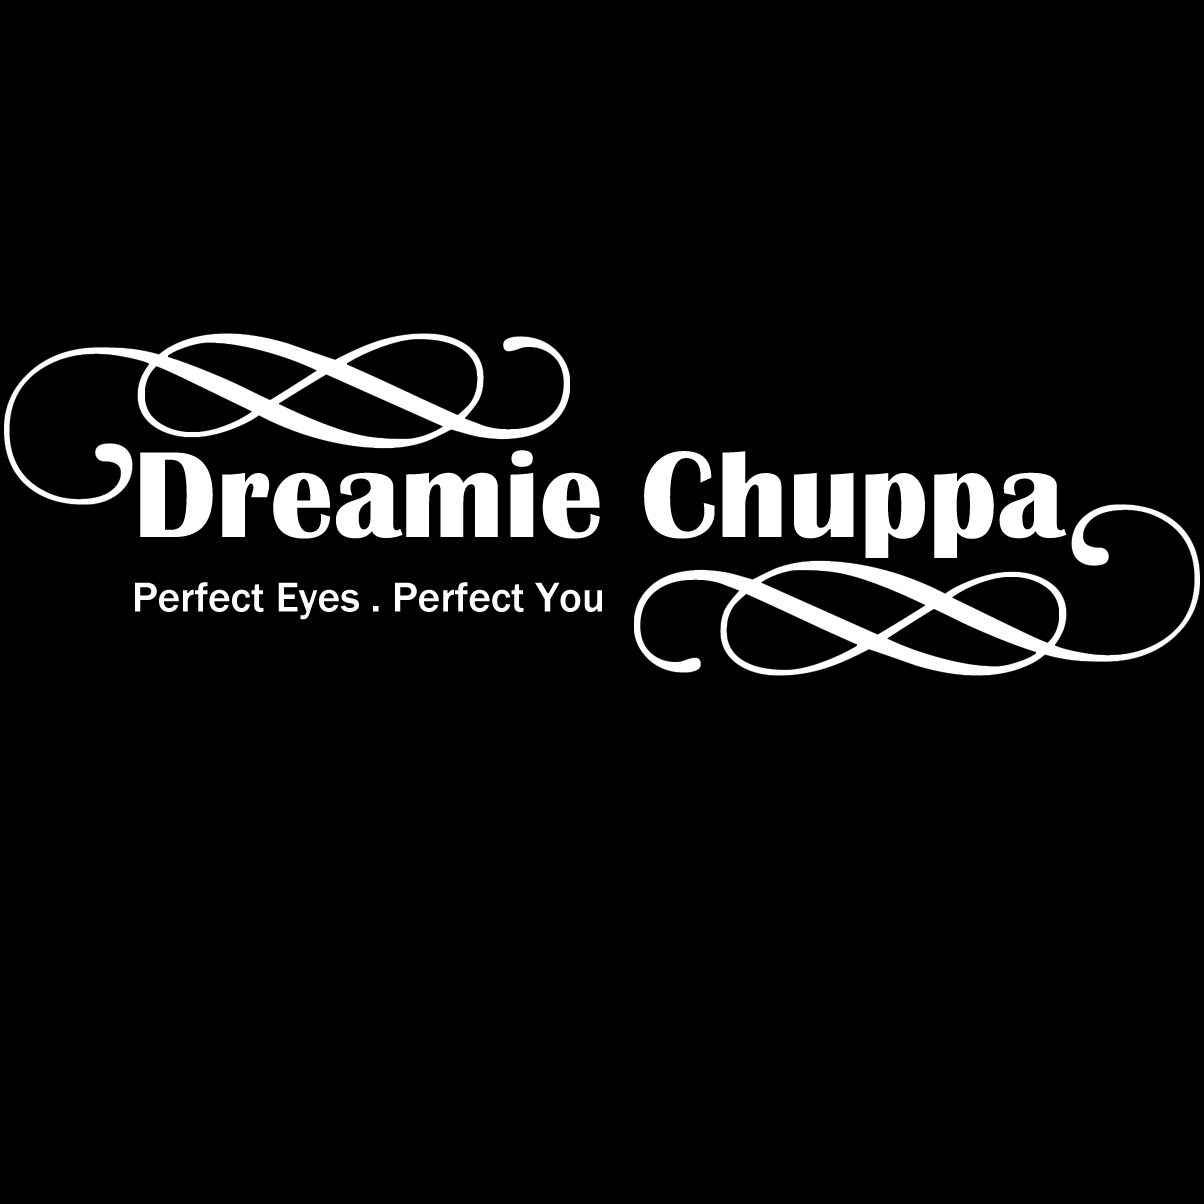 Dreamie Chuppa